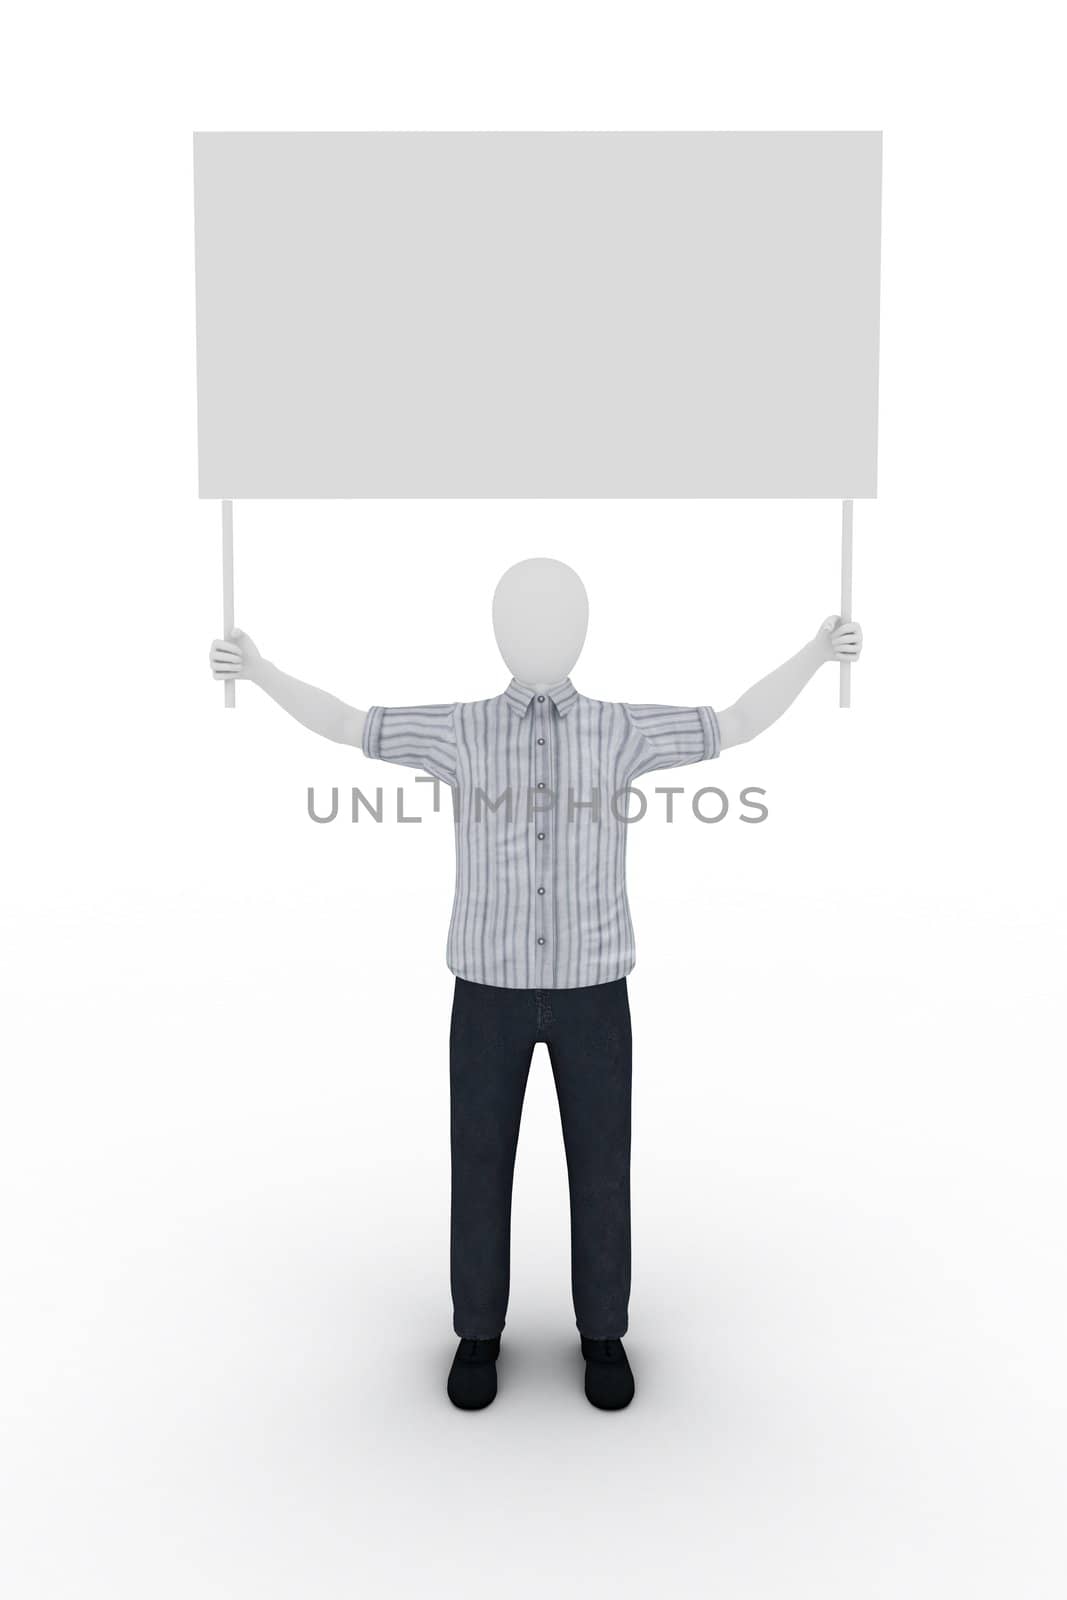 3d human model holding a billboard